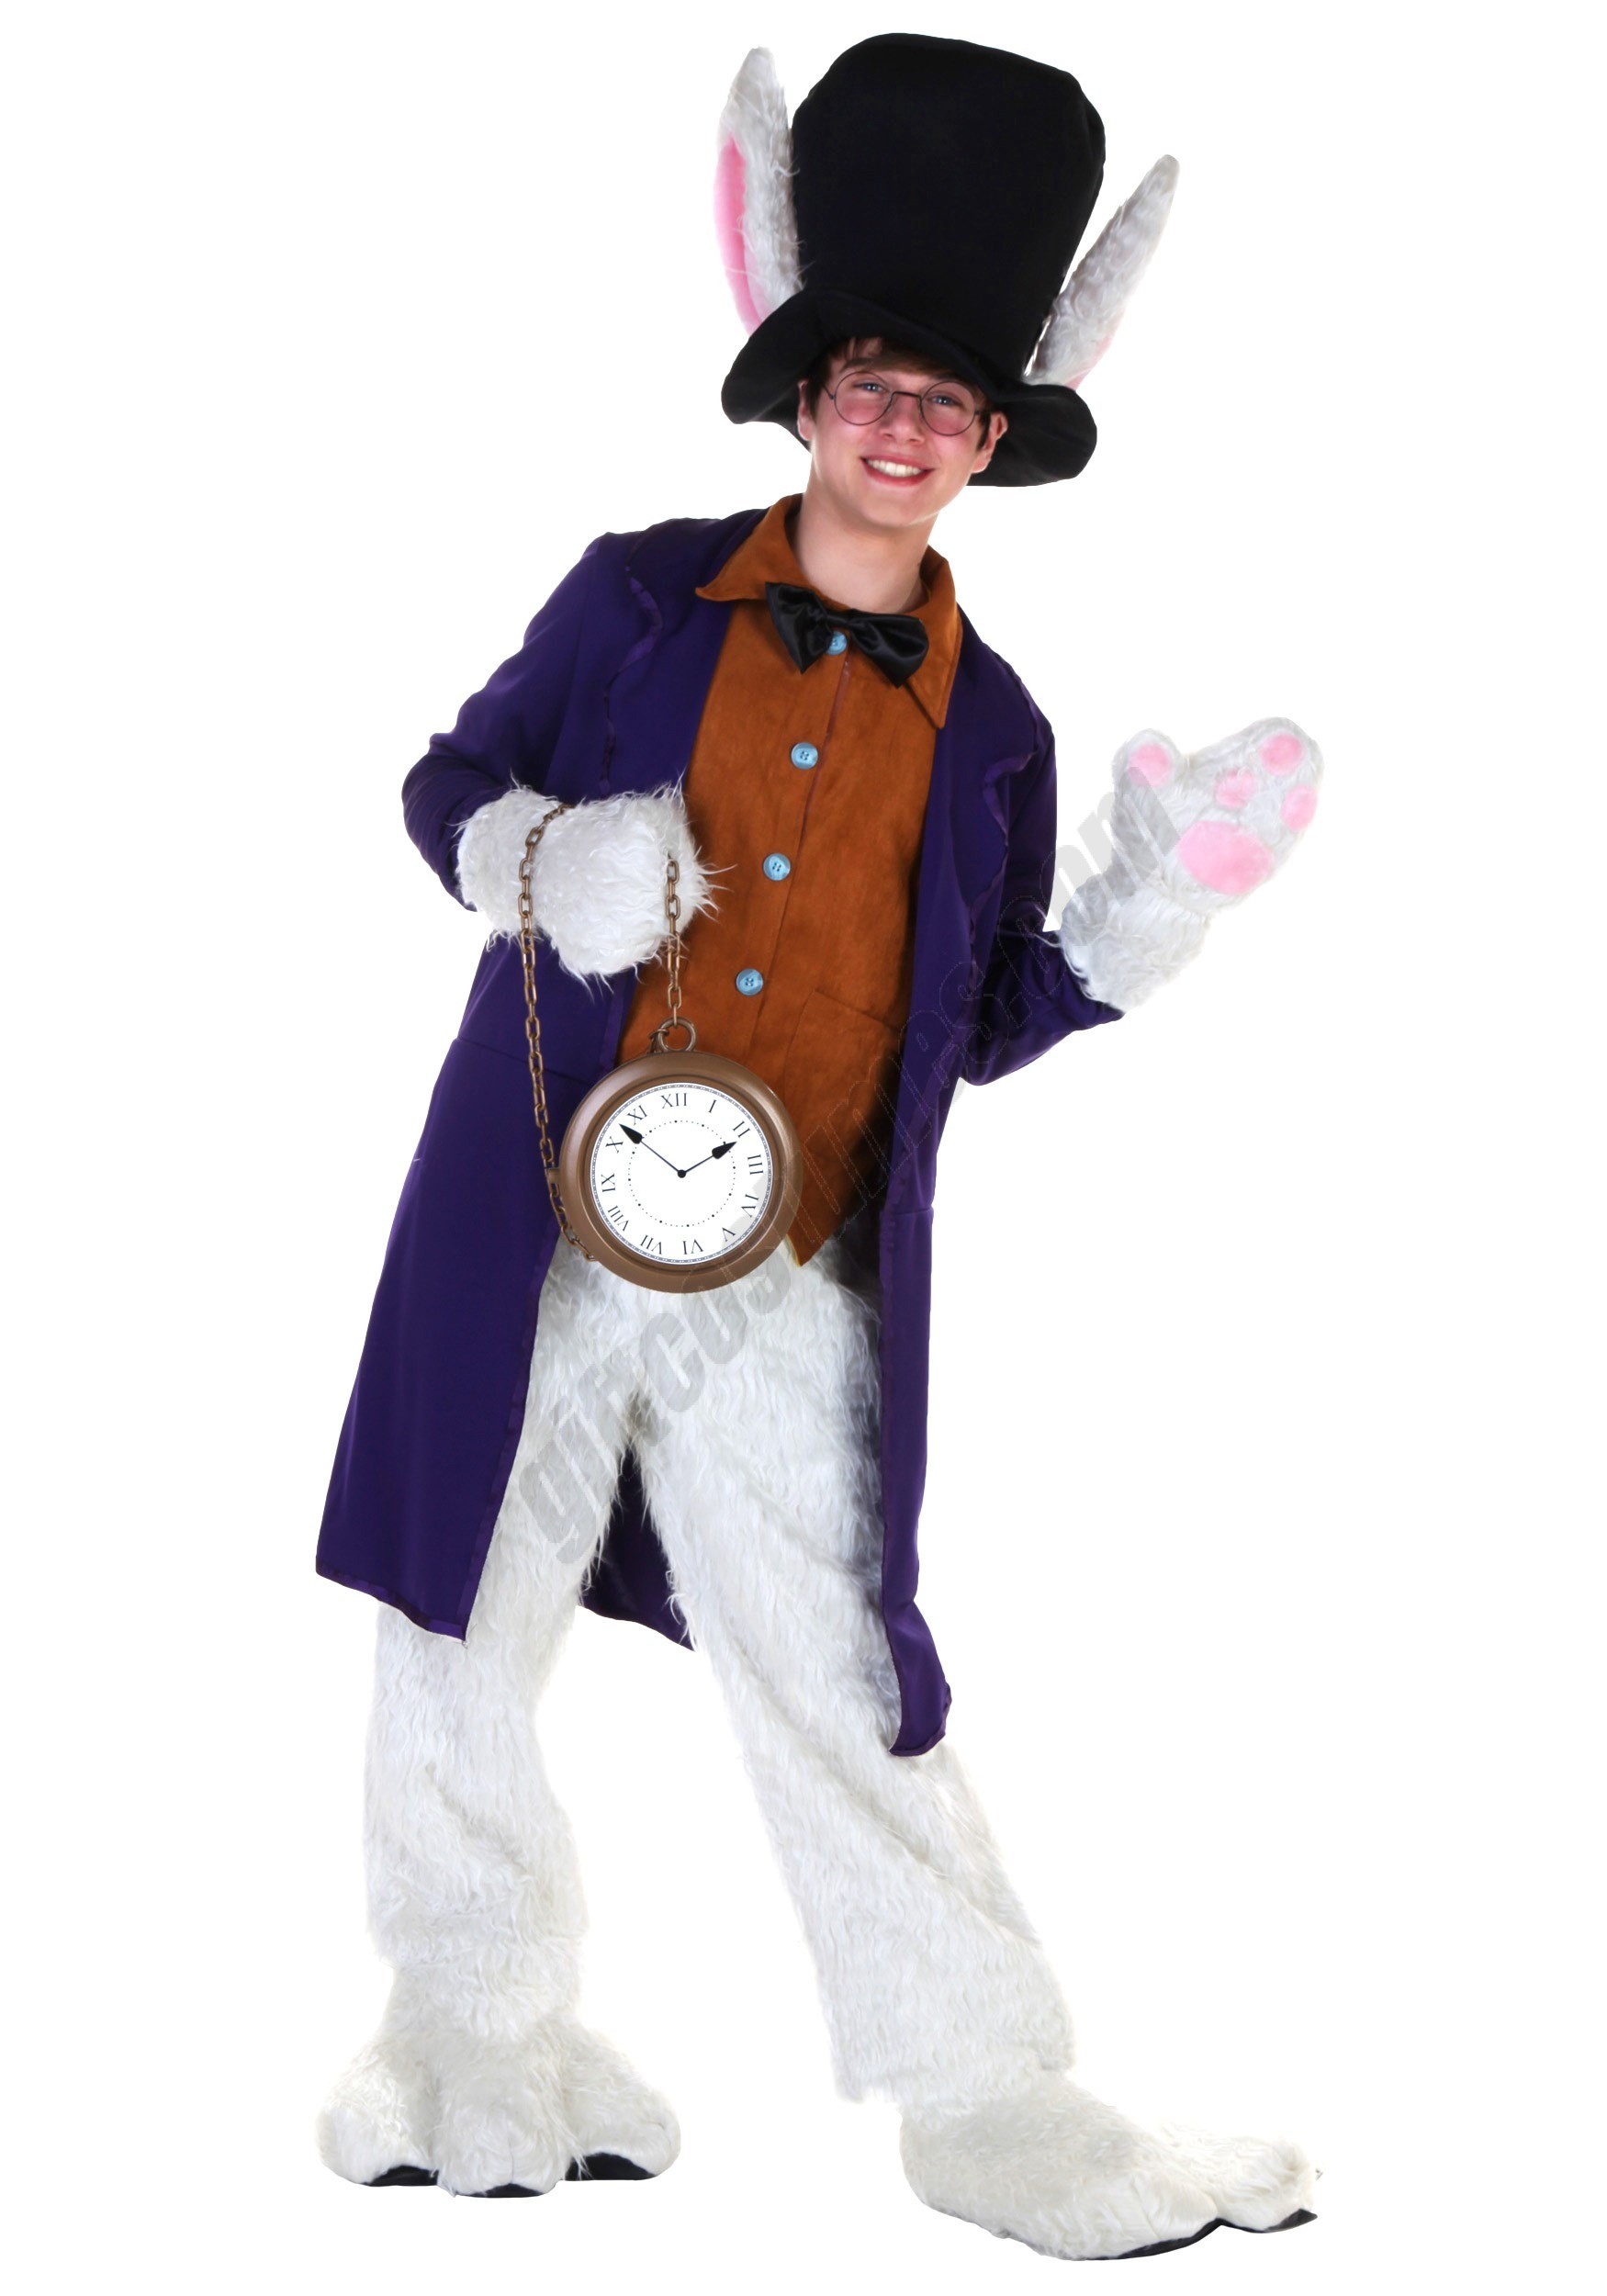 Wonderland White Rabbit Costume for Teens Promotions - Wonderland White Rabbit Costume for Teens Promotions